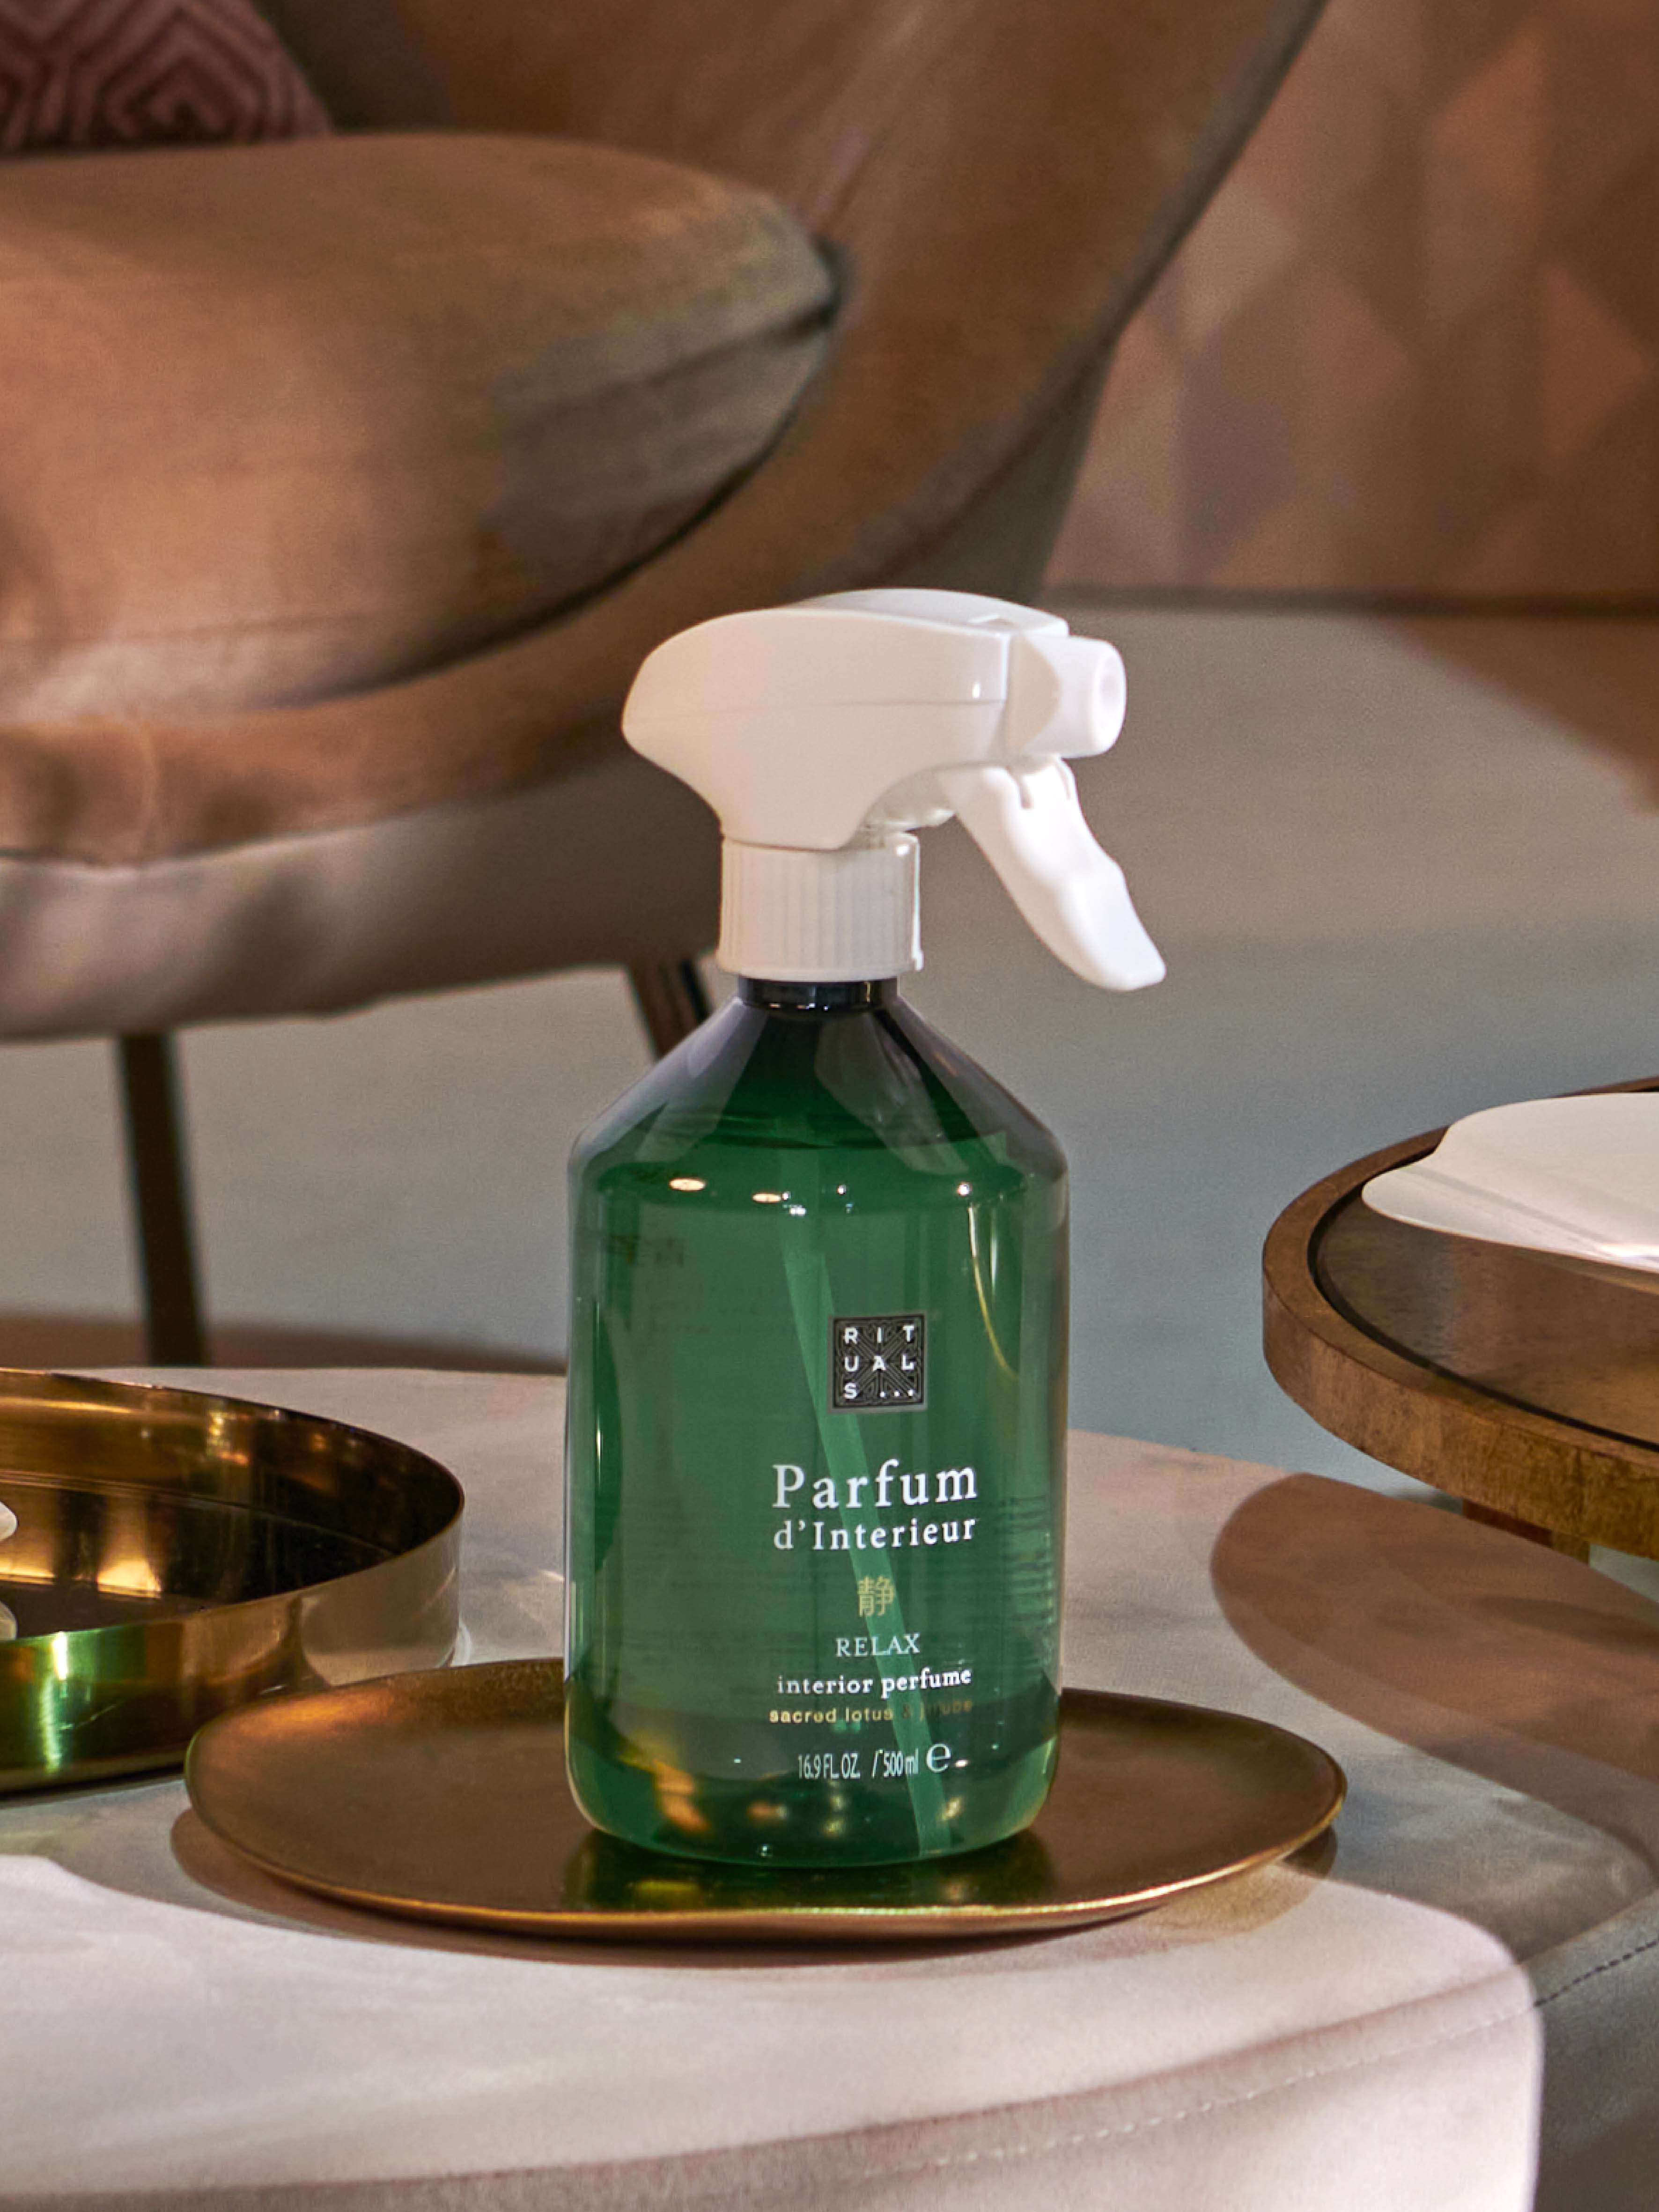 Rituals The Ritual Of Jing Relax Home Fragrance Parfum d'Interieur 500 ml